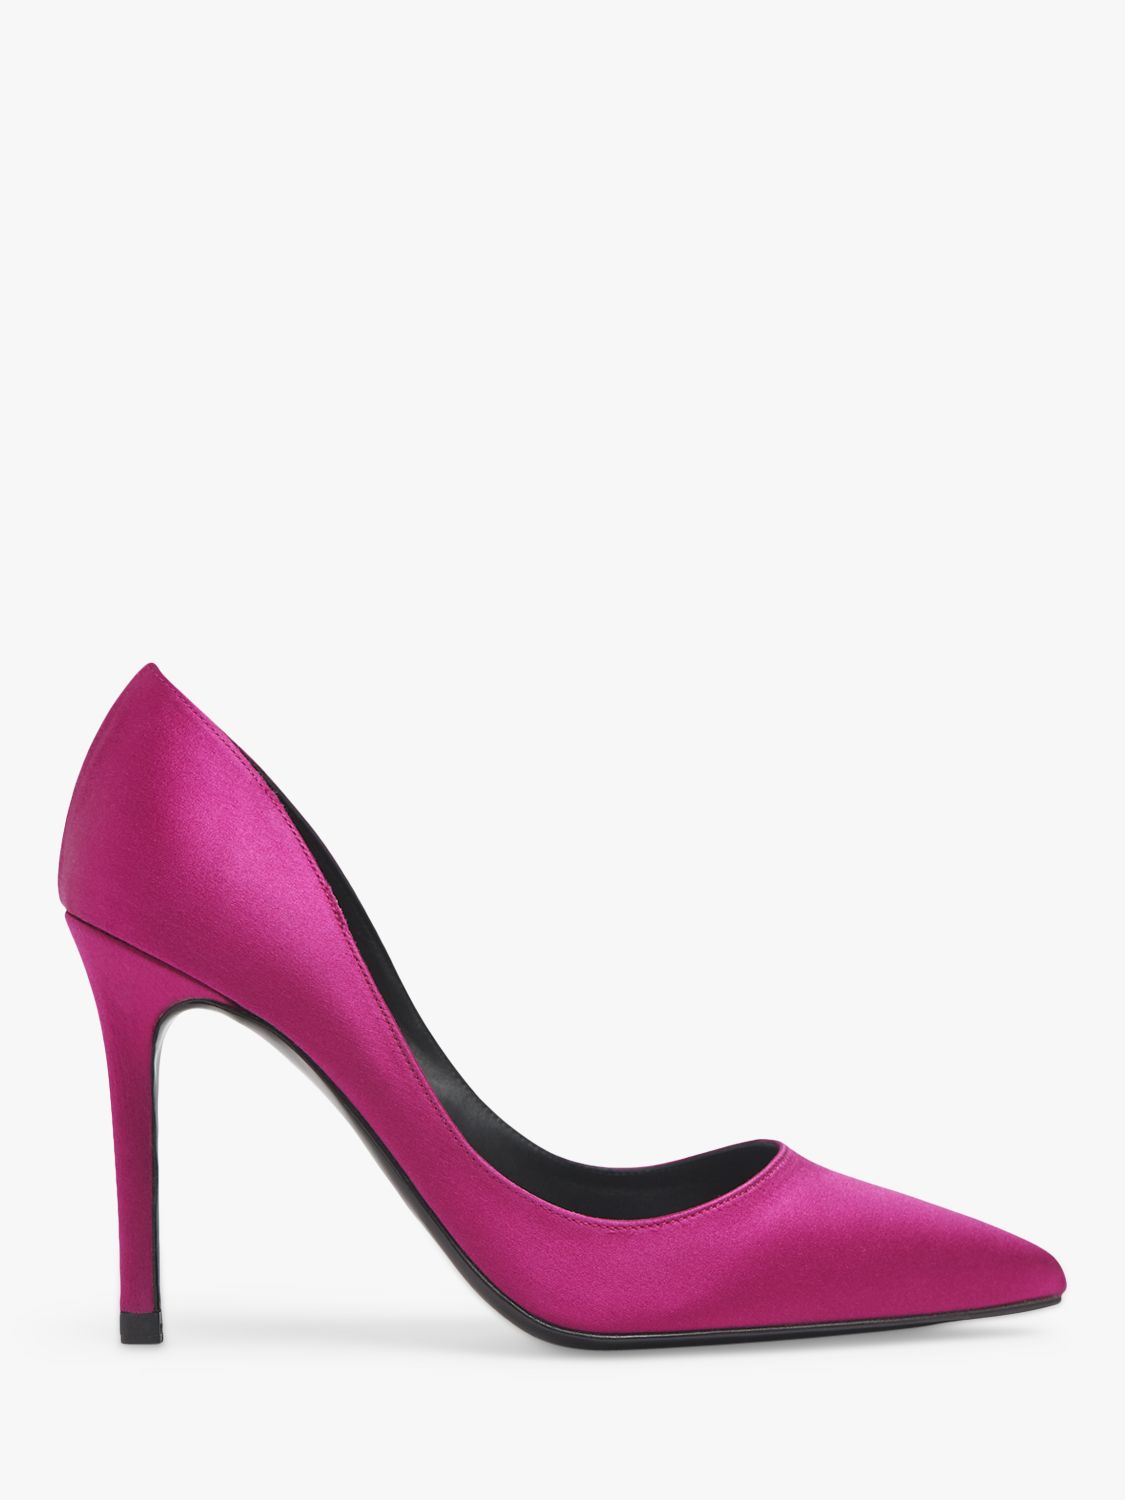 rose coloured shoes uk